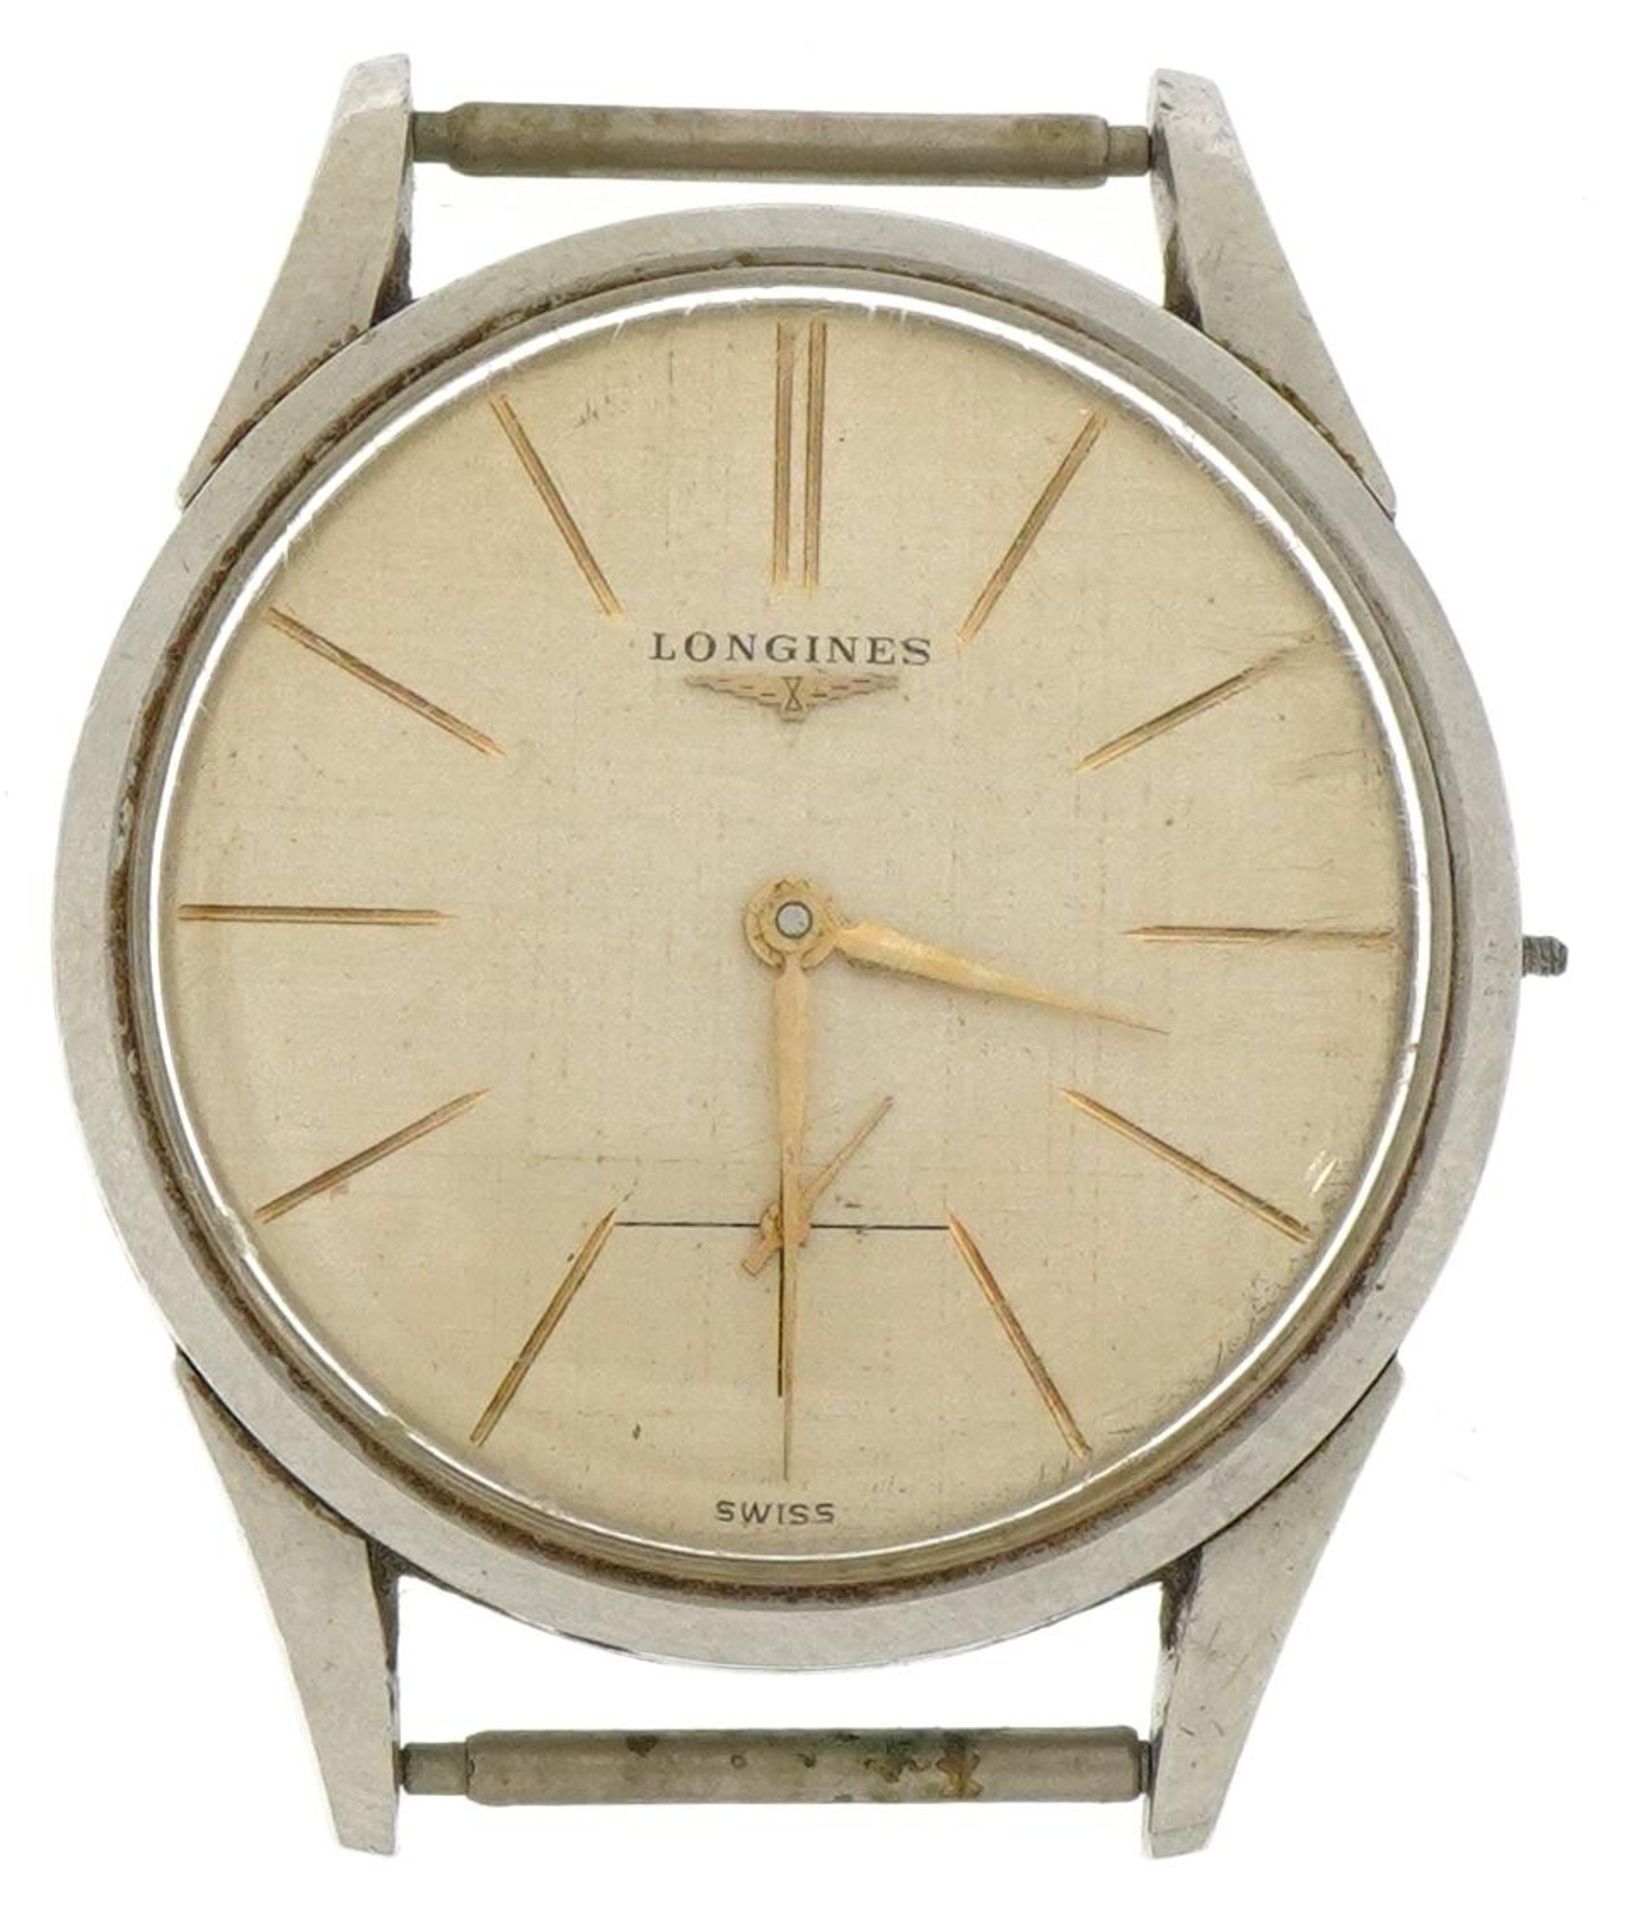 Longines, gentlemen's stainless steel wristwatch, 34mm in diameter